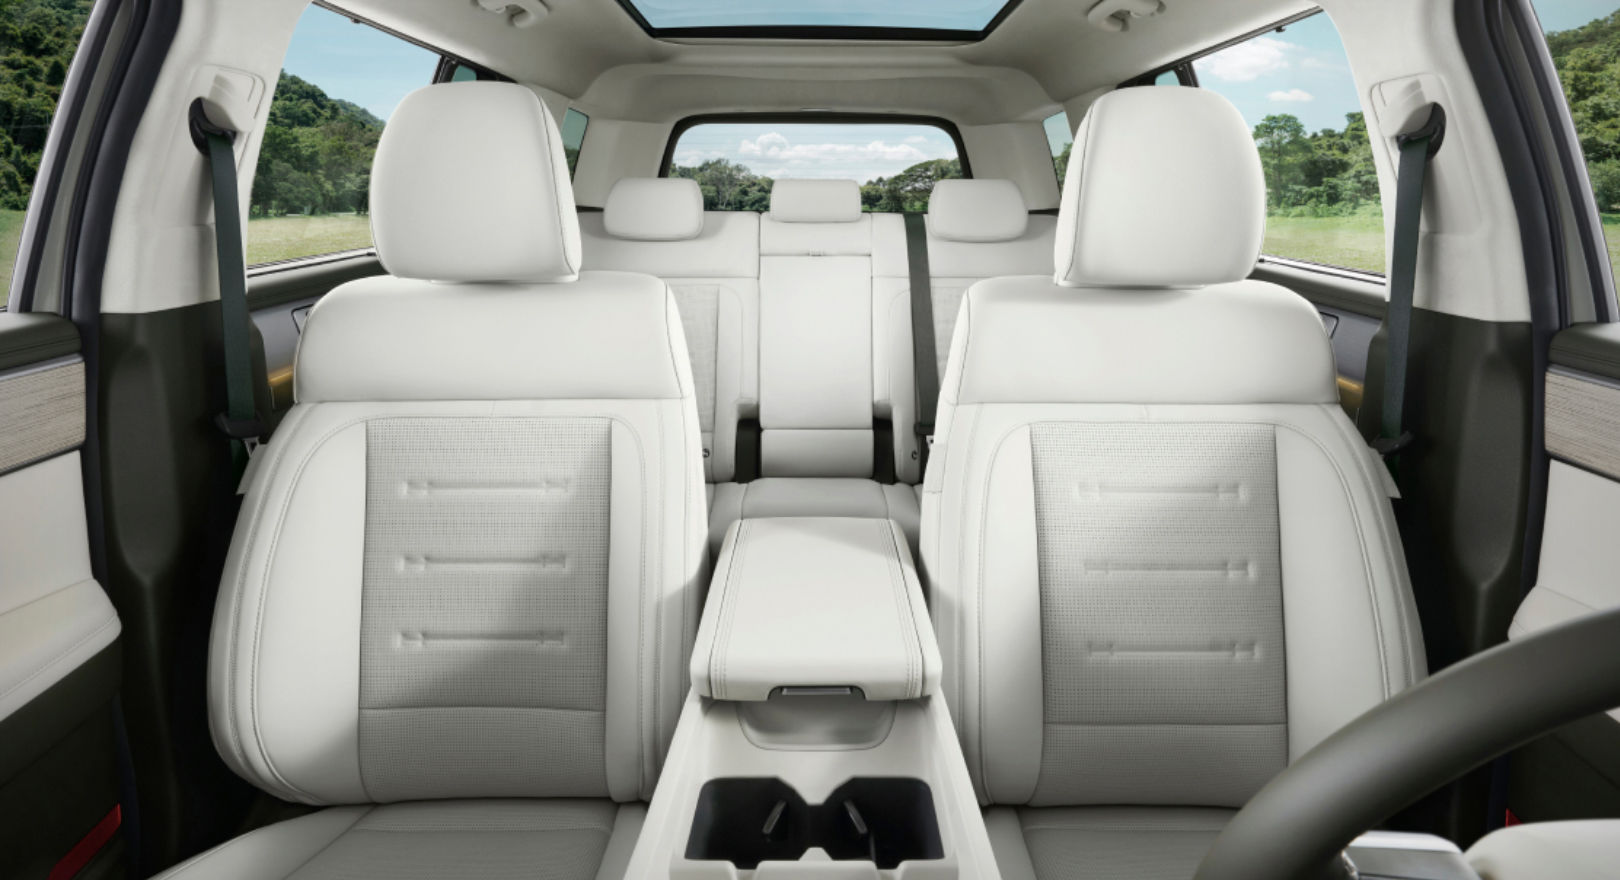 The all-new SANTA FE 5 seat interior